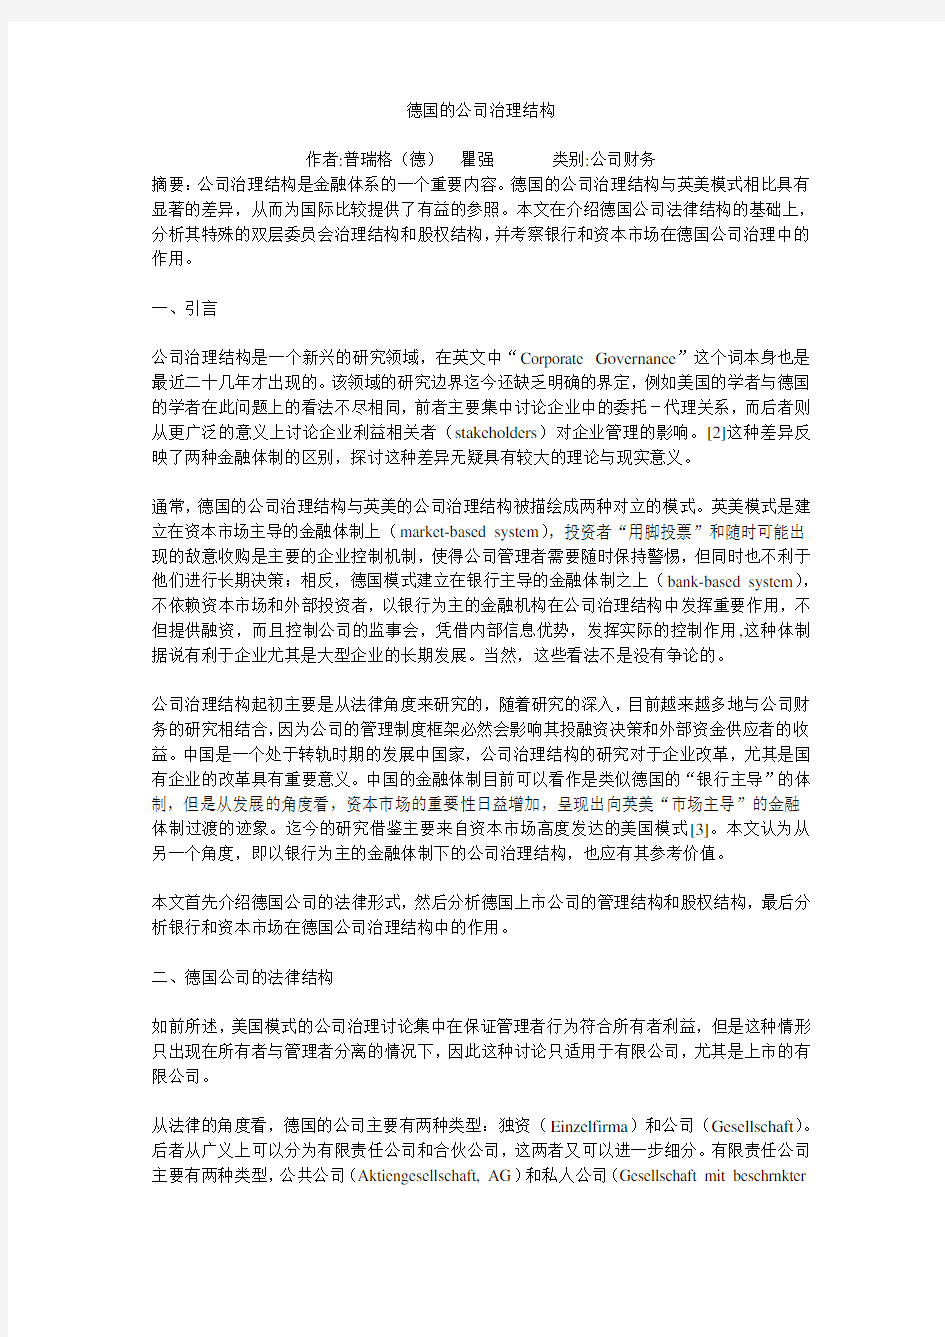 德国的公司治理结构Gemany Company Governance Structure(Chinese Version)